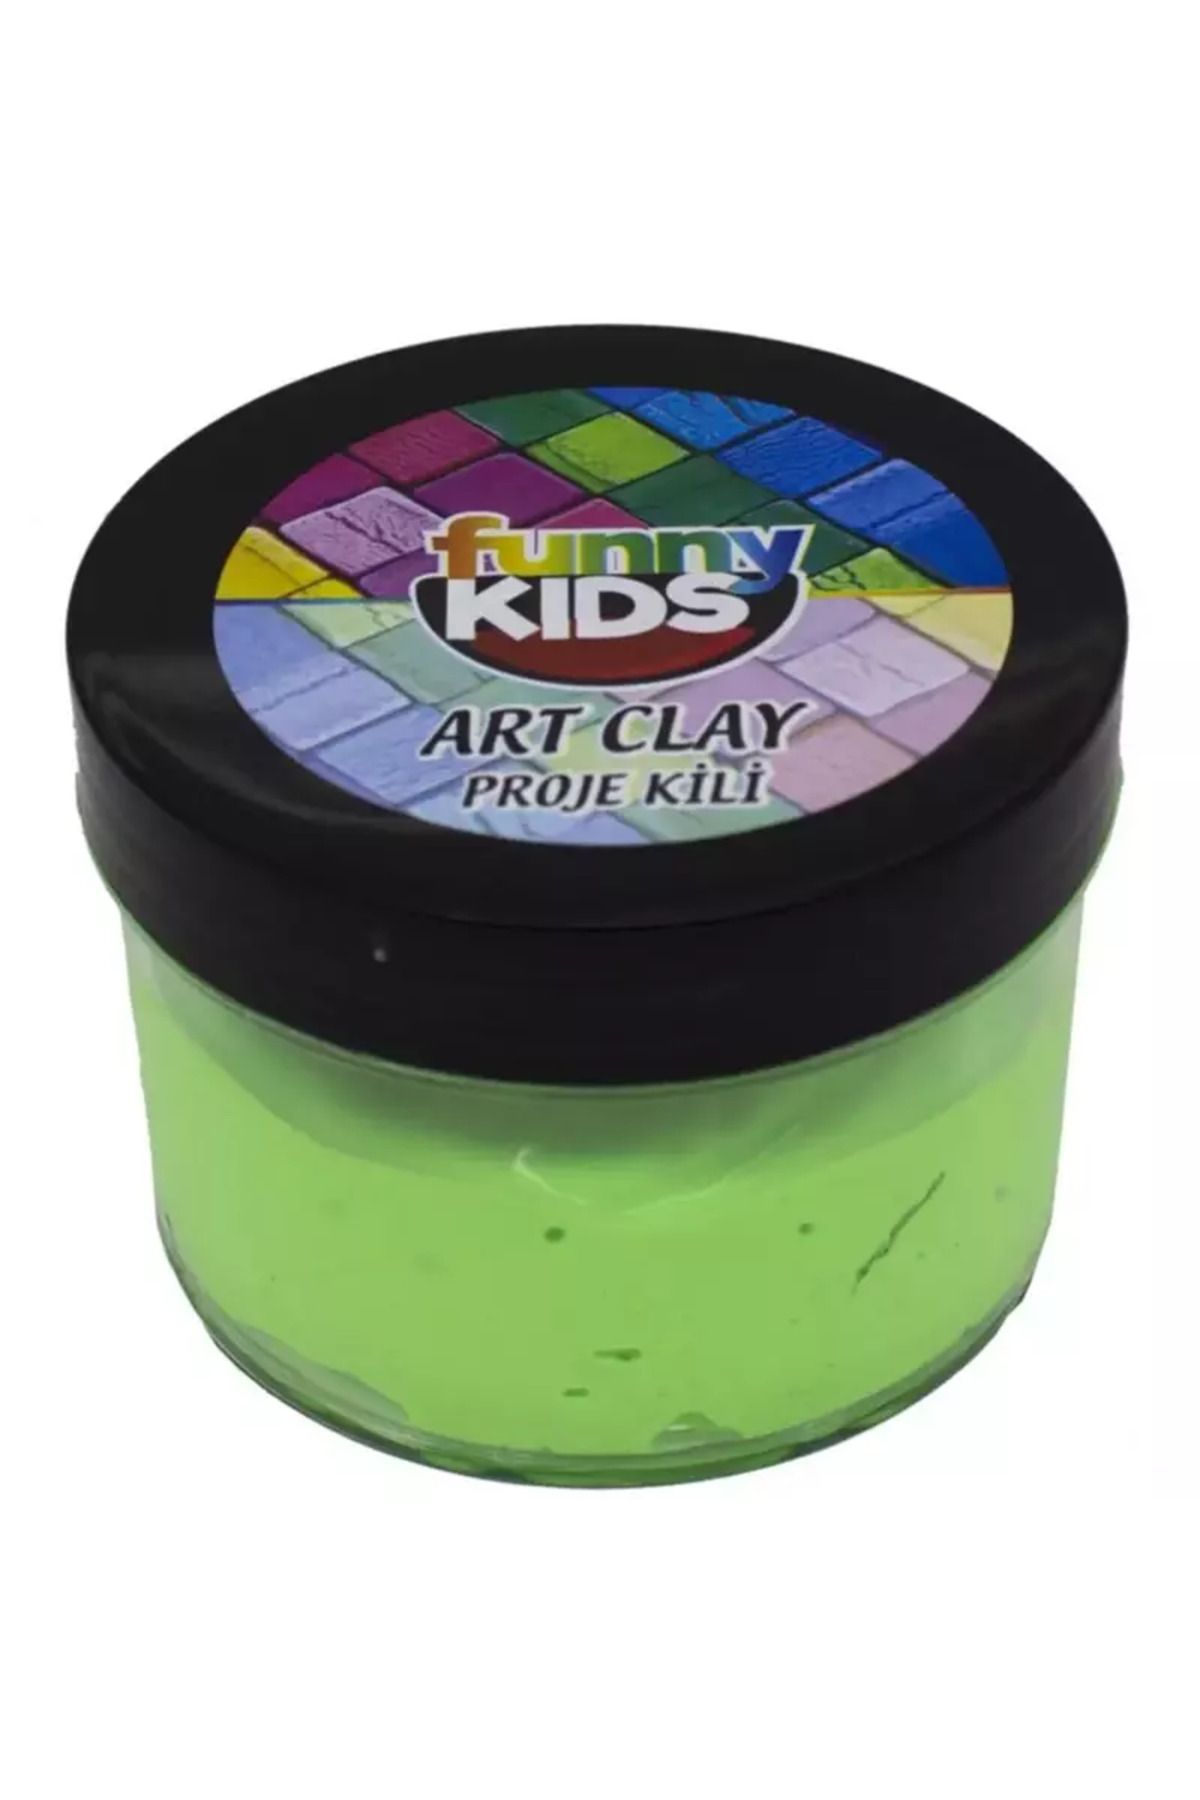 Rich Funny Kids Art Clay Proje Kili 40cc Neon Yeşil 578